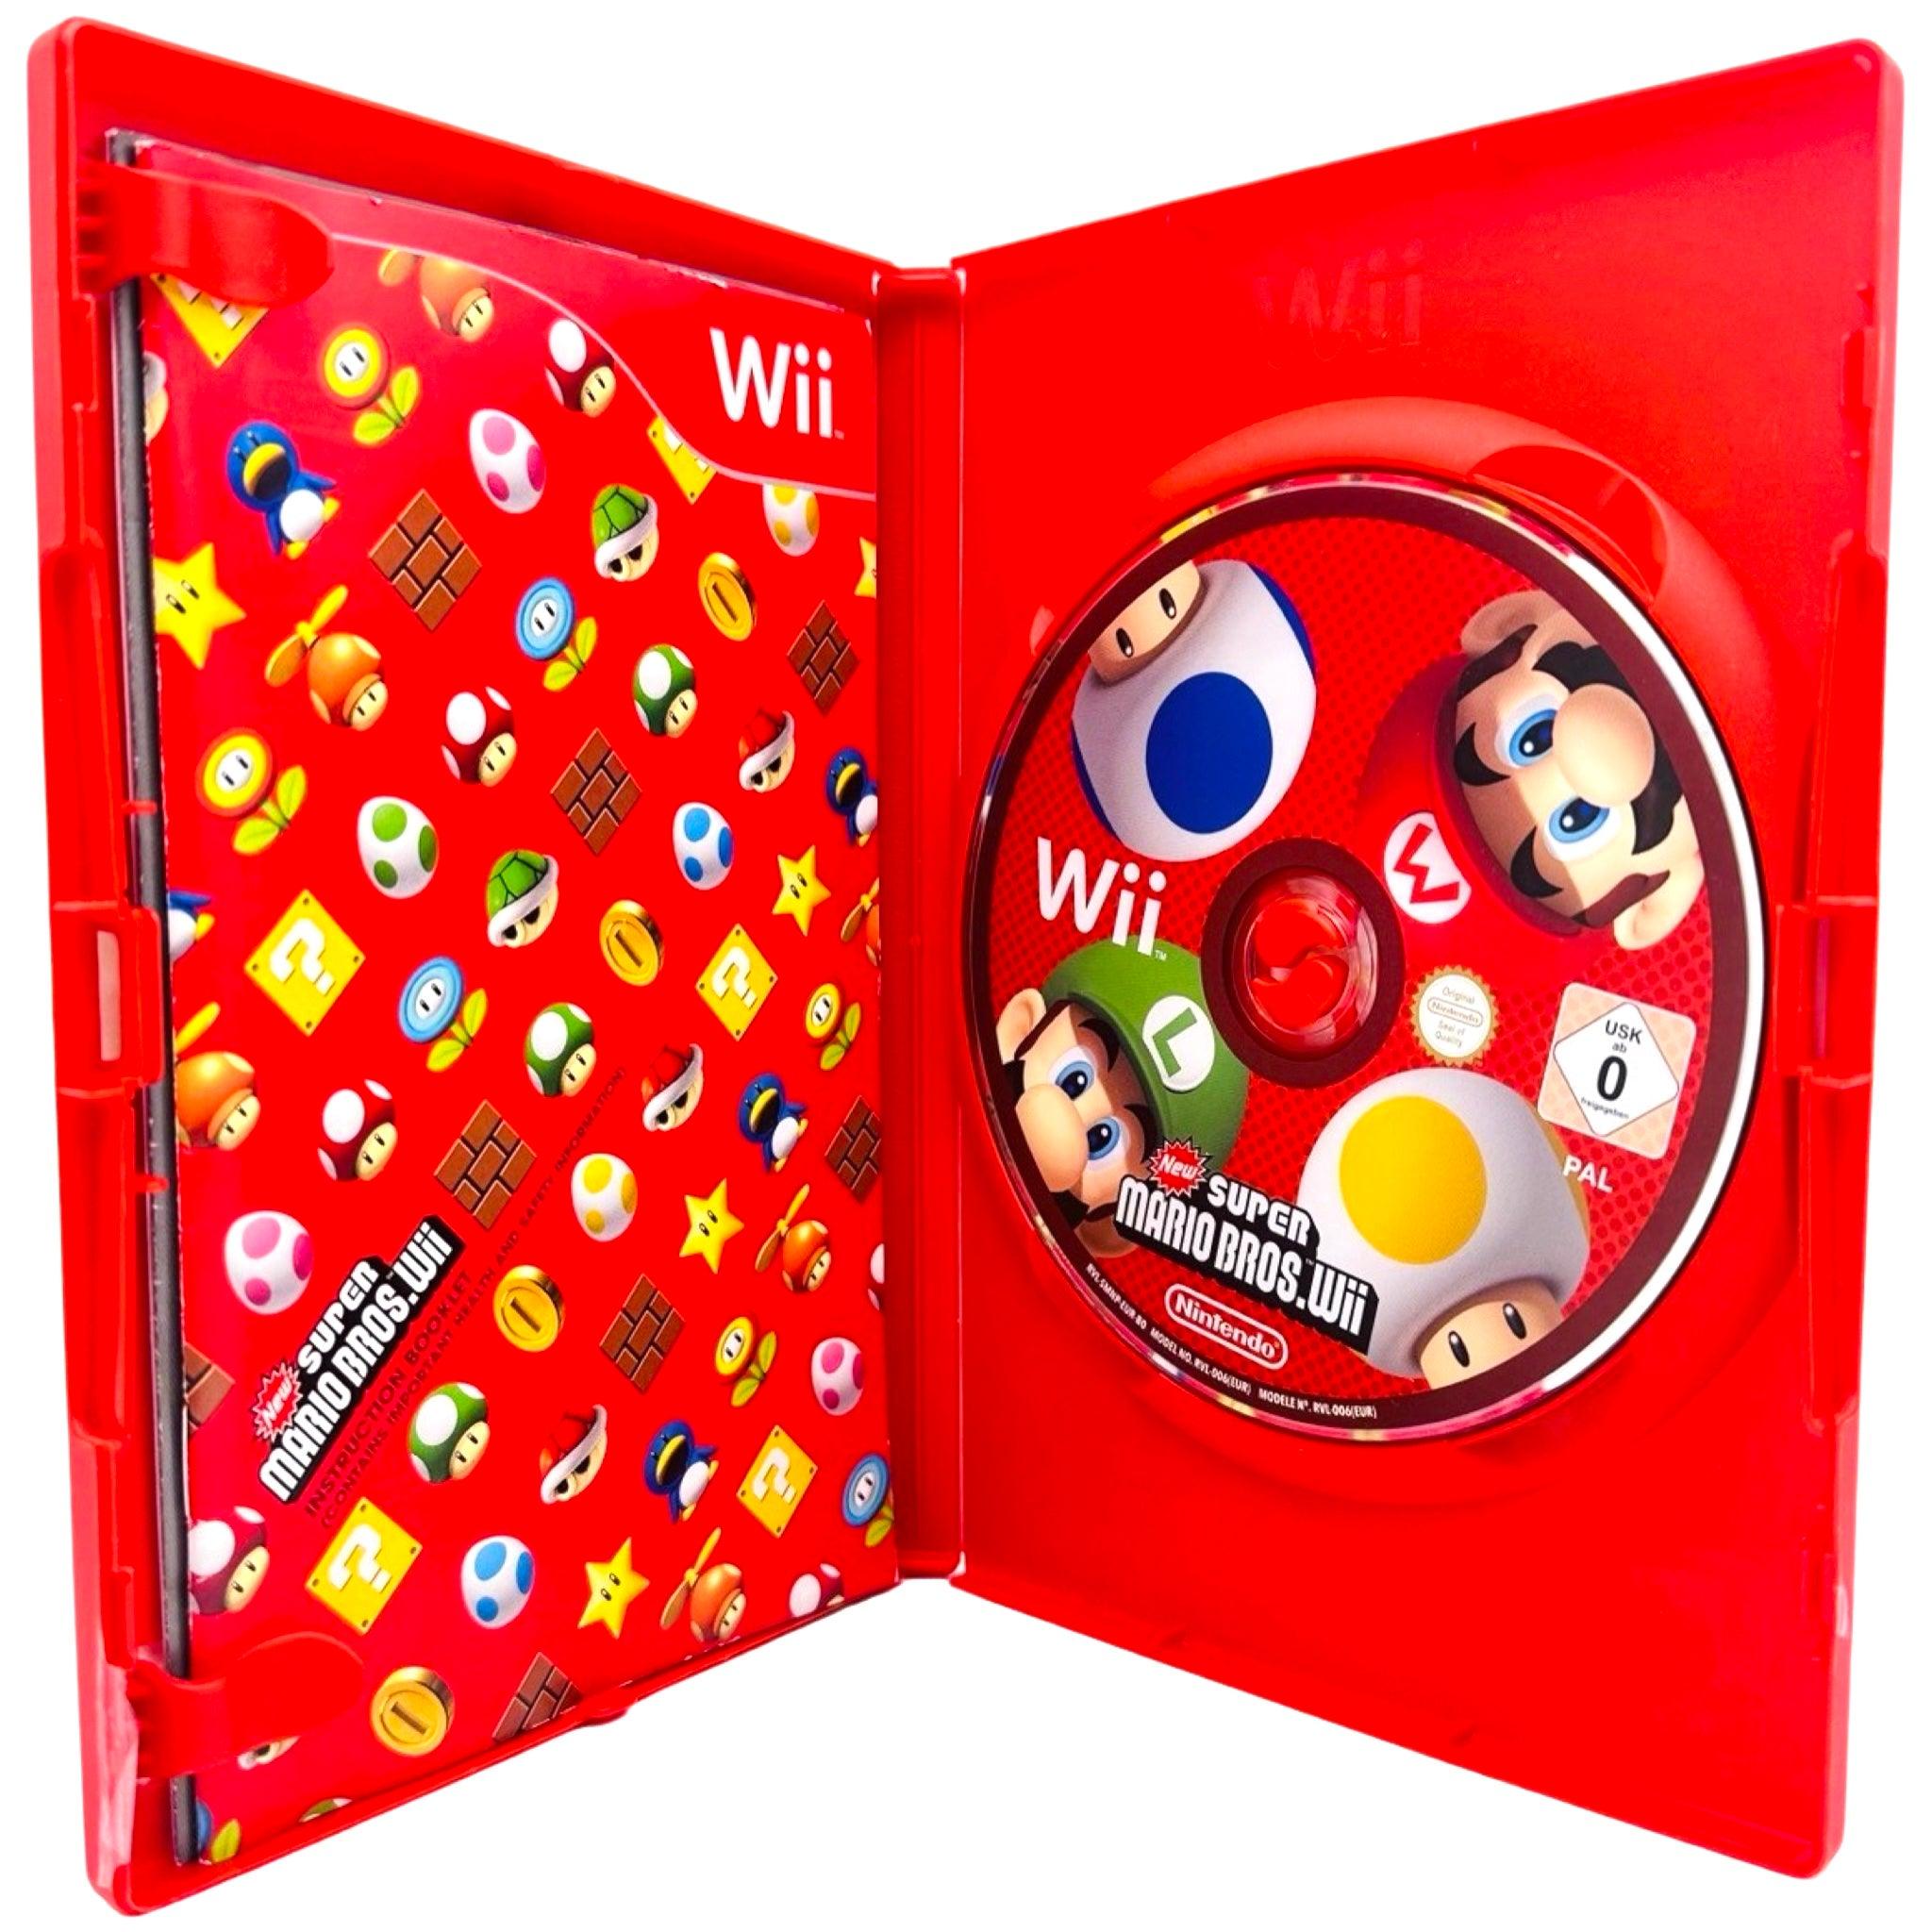 Wii: New Super Mario Bros. Wii - RetroGaming.no